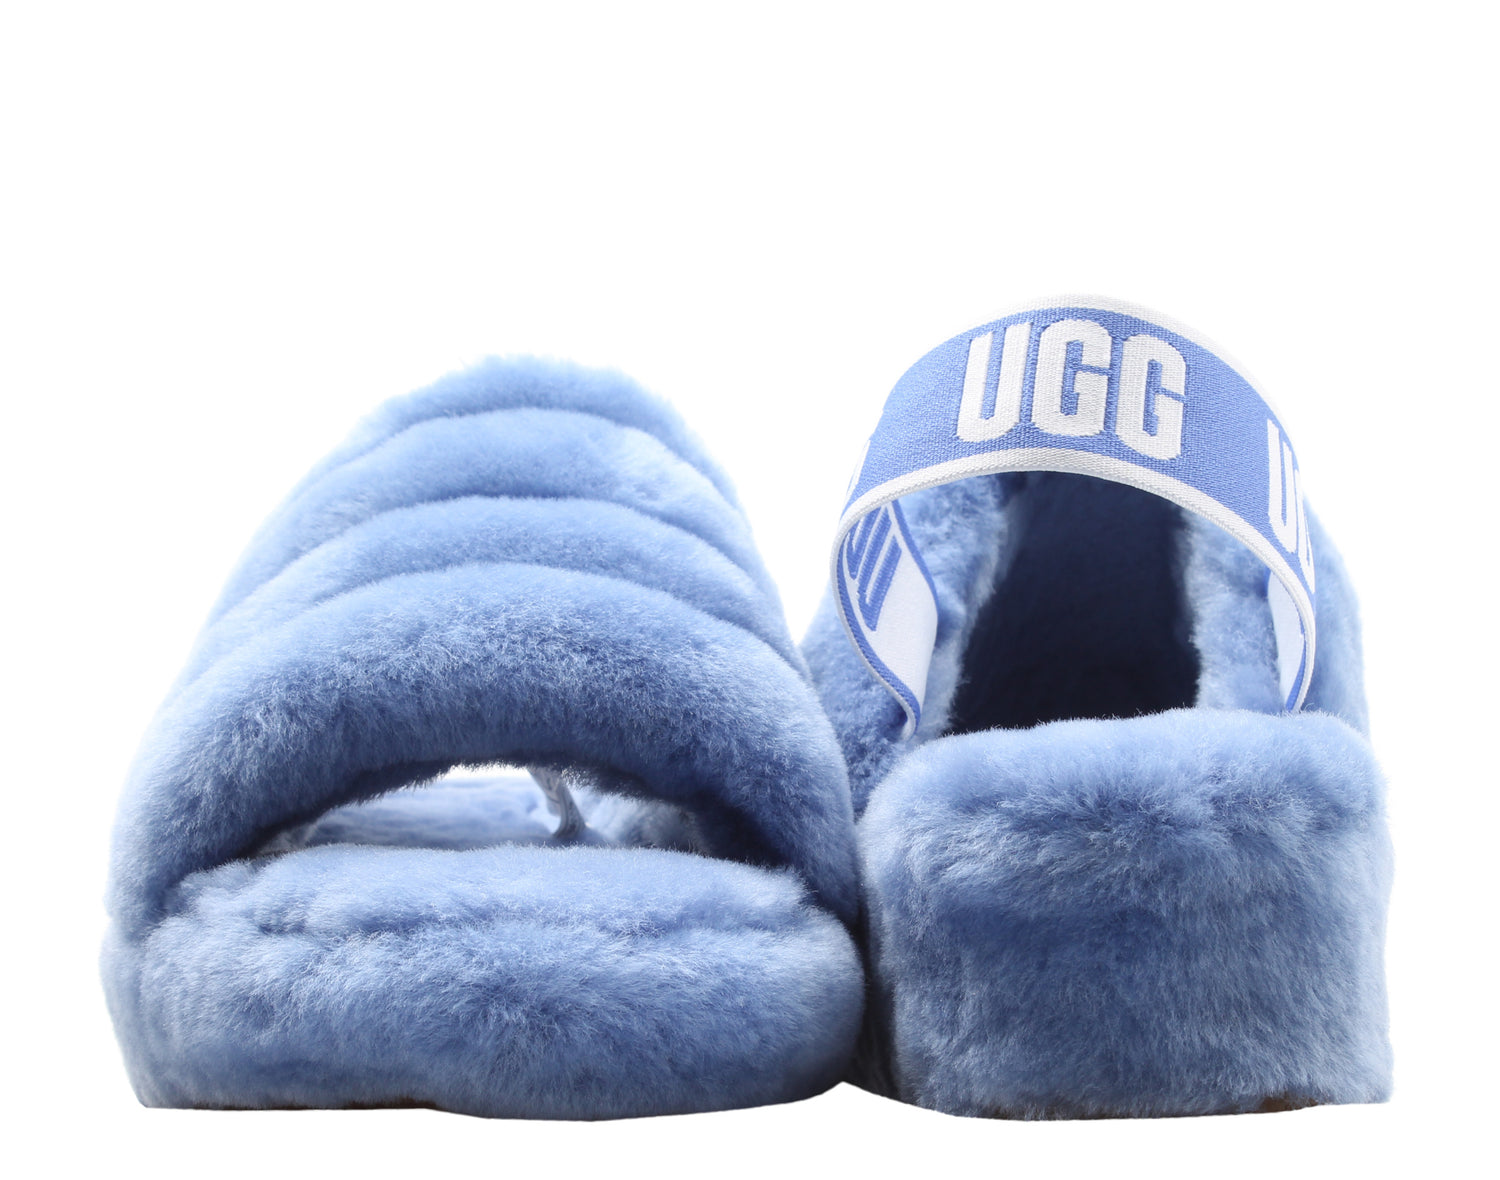 UGG Australia Fluff Yeah Slide Women's Sandals